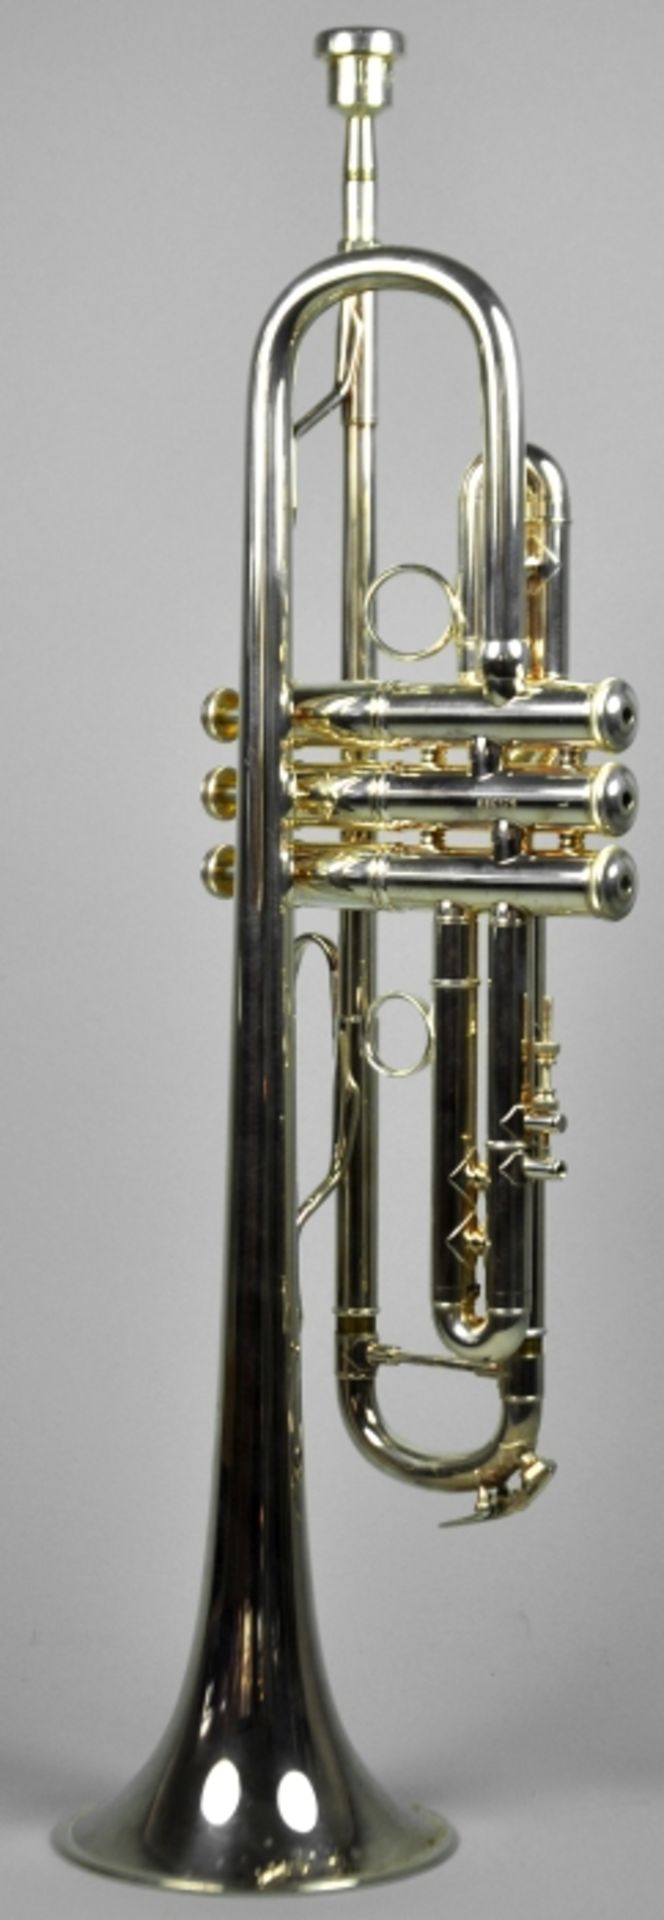 TROMPETE Stradivarius, Model 7 New York, Vincent Bach, Messing versilbert, Seriennummer: 680179, - Bild 2 aus 3